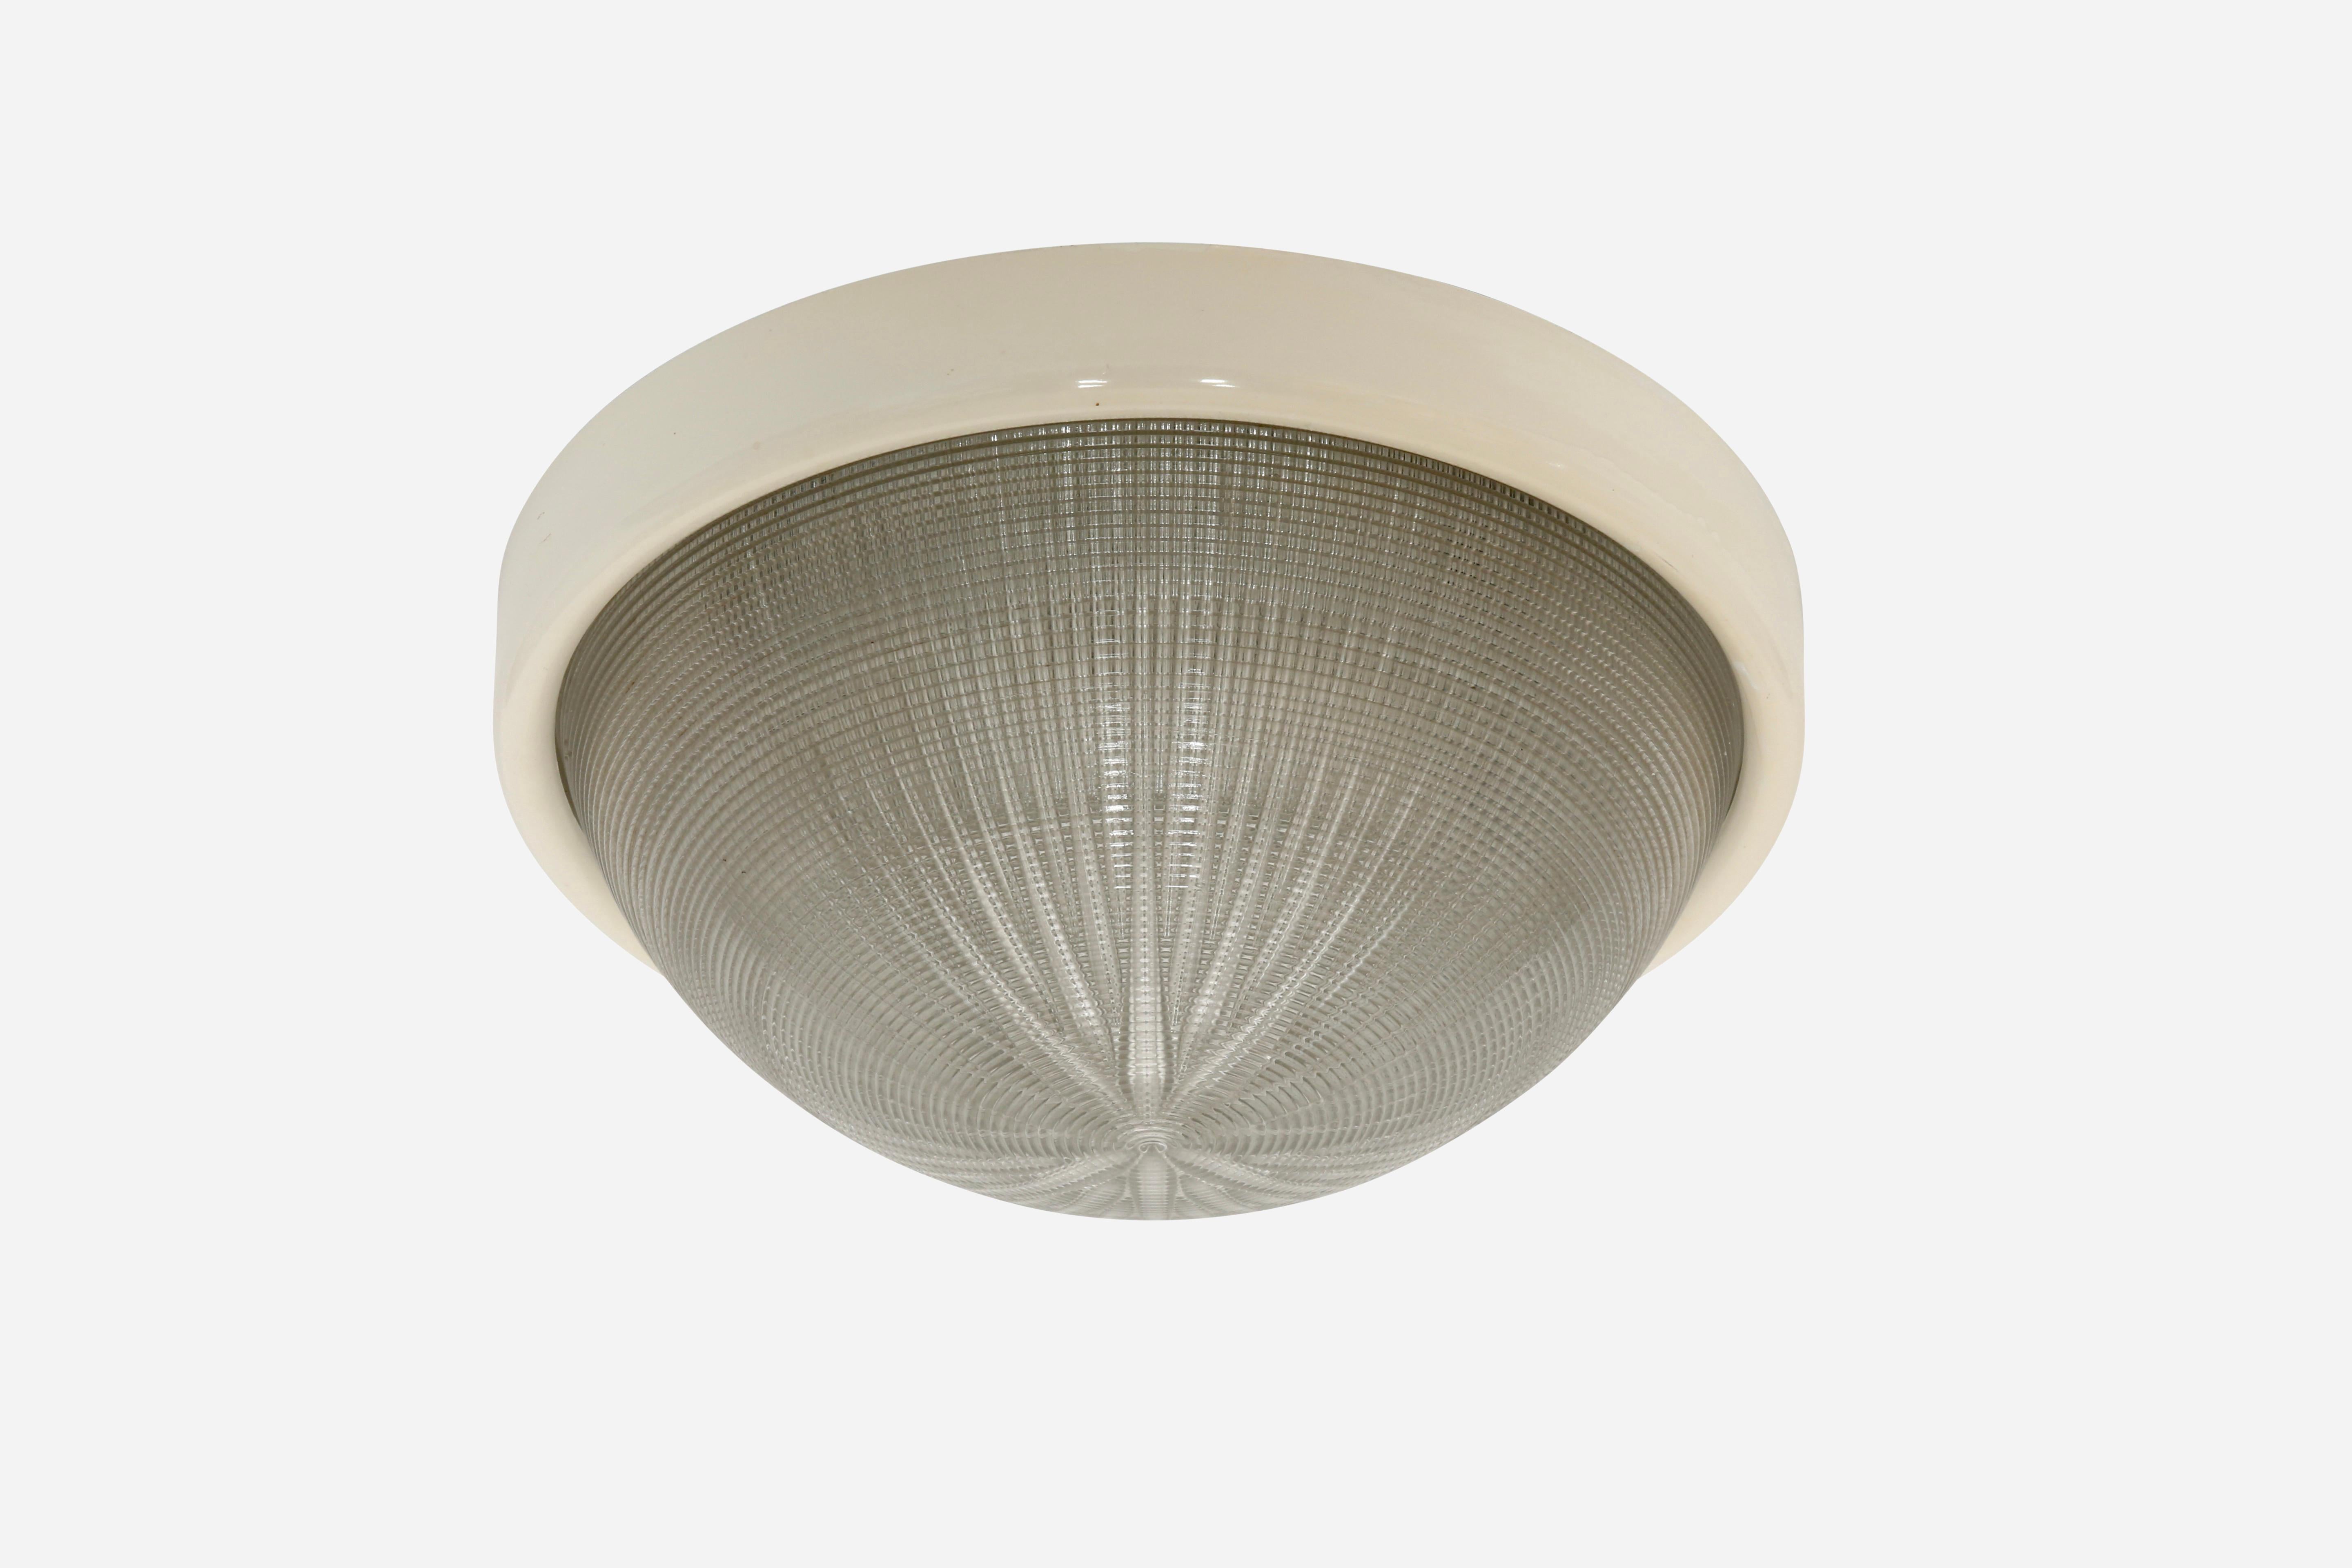 Sergio Mazza Style Flush Mount ceiling light For Sale 1